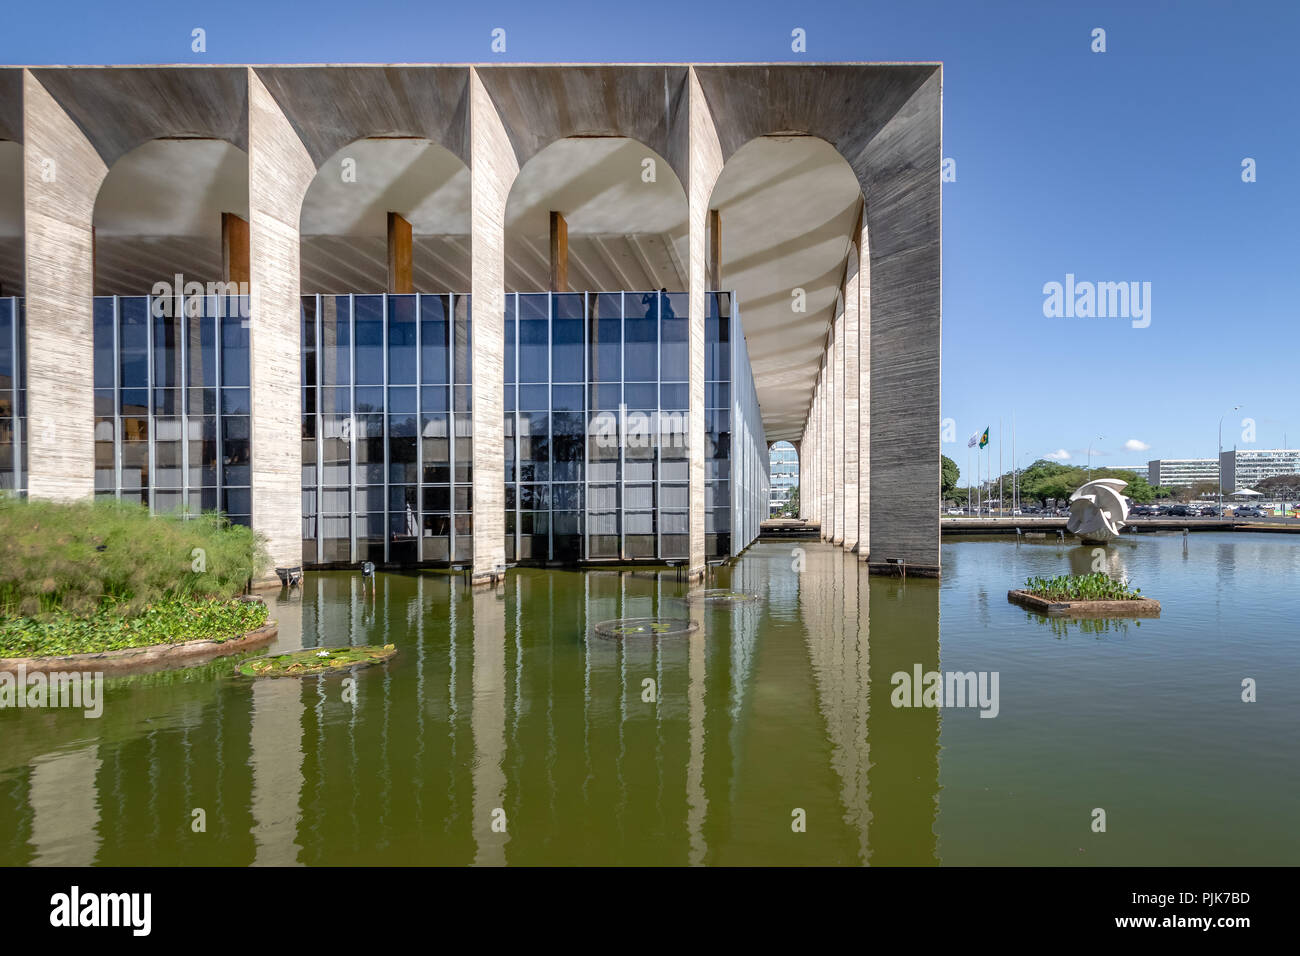 Itamaraty Palace - Brasilia, Distrito Federal, Brazil Stock Photo